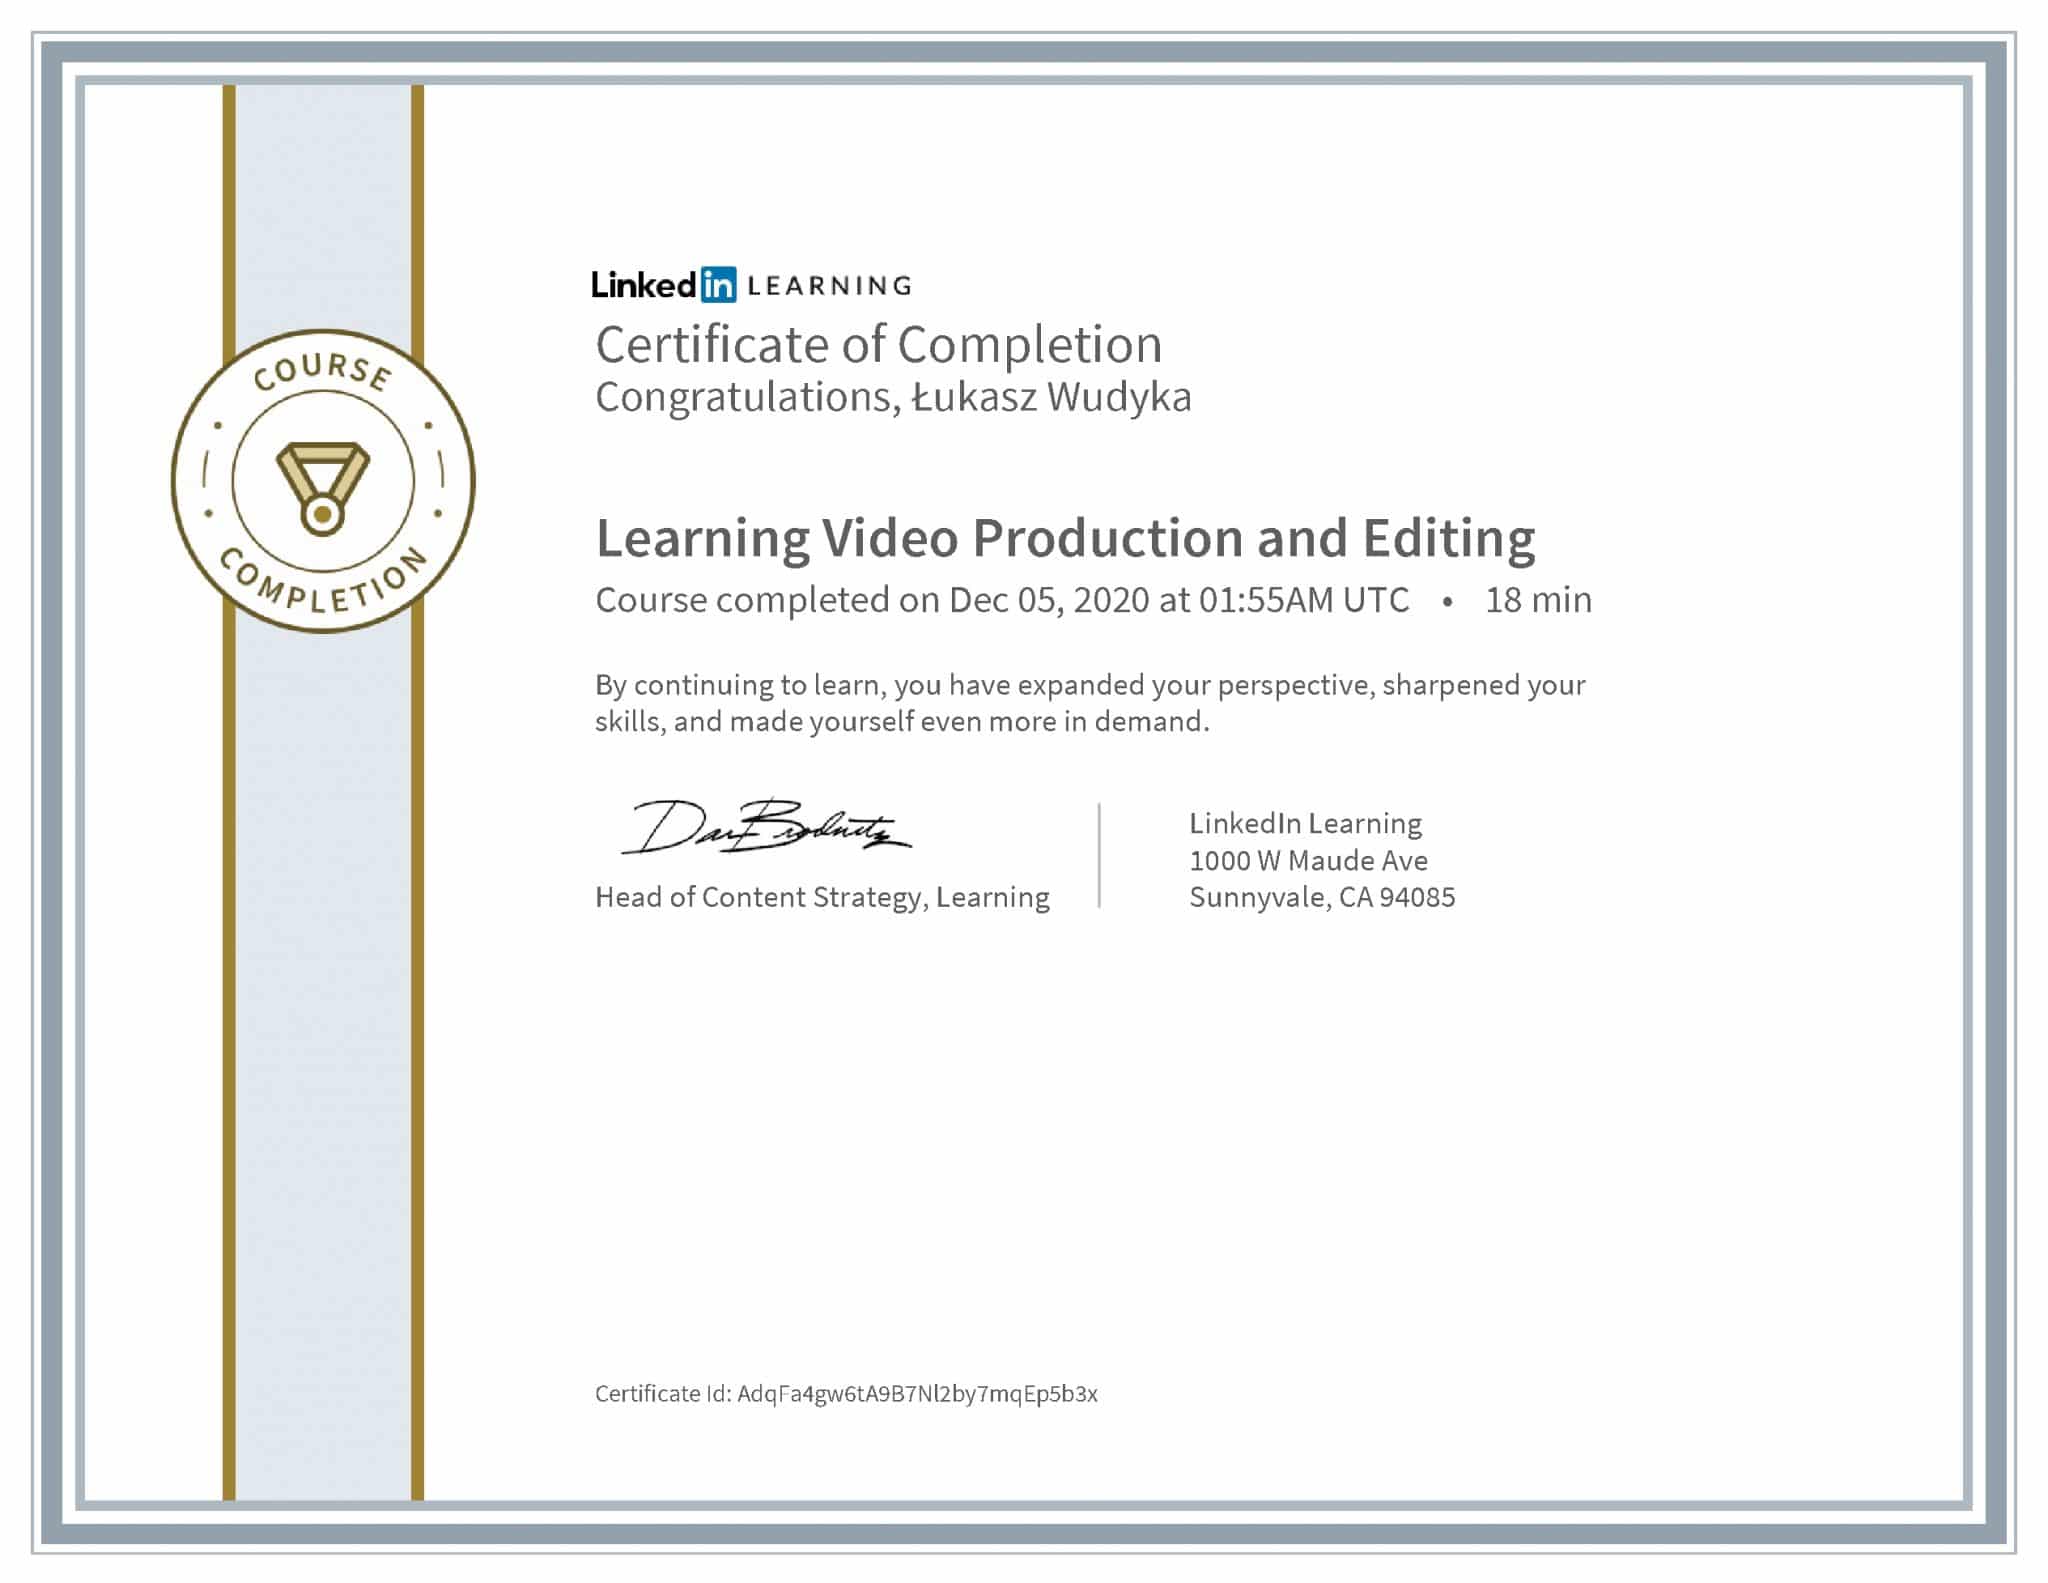 Łukasz Wudyka certyfikat LinkedIn Learning Video Production and Editing